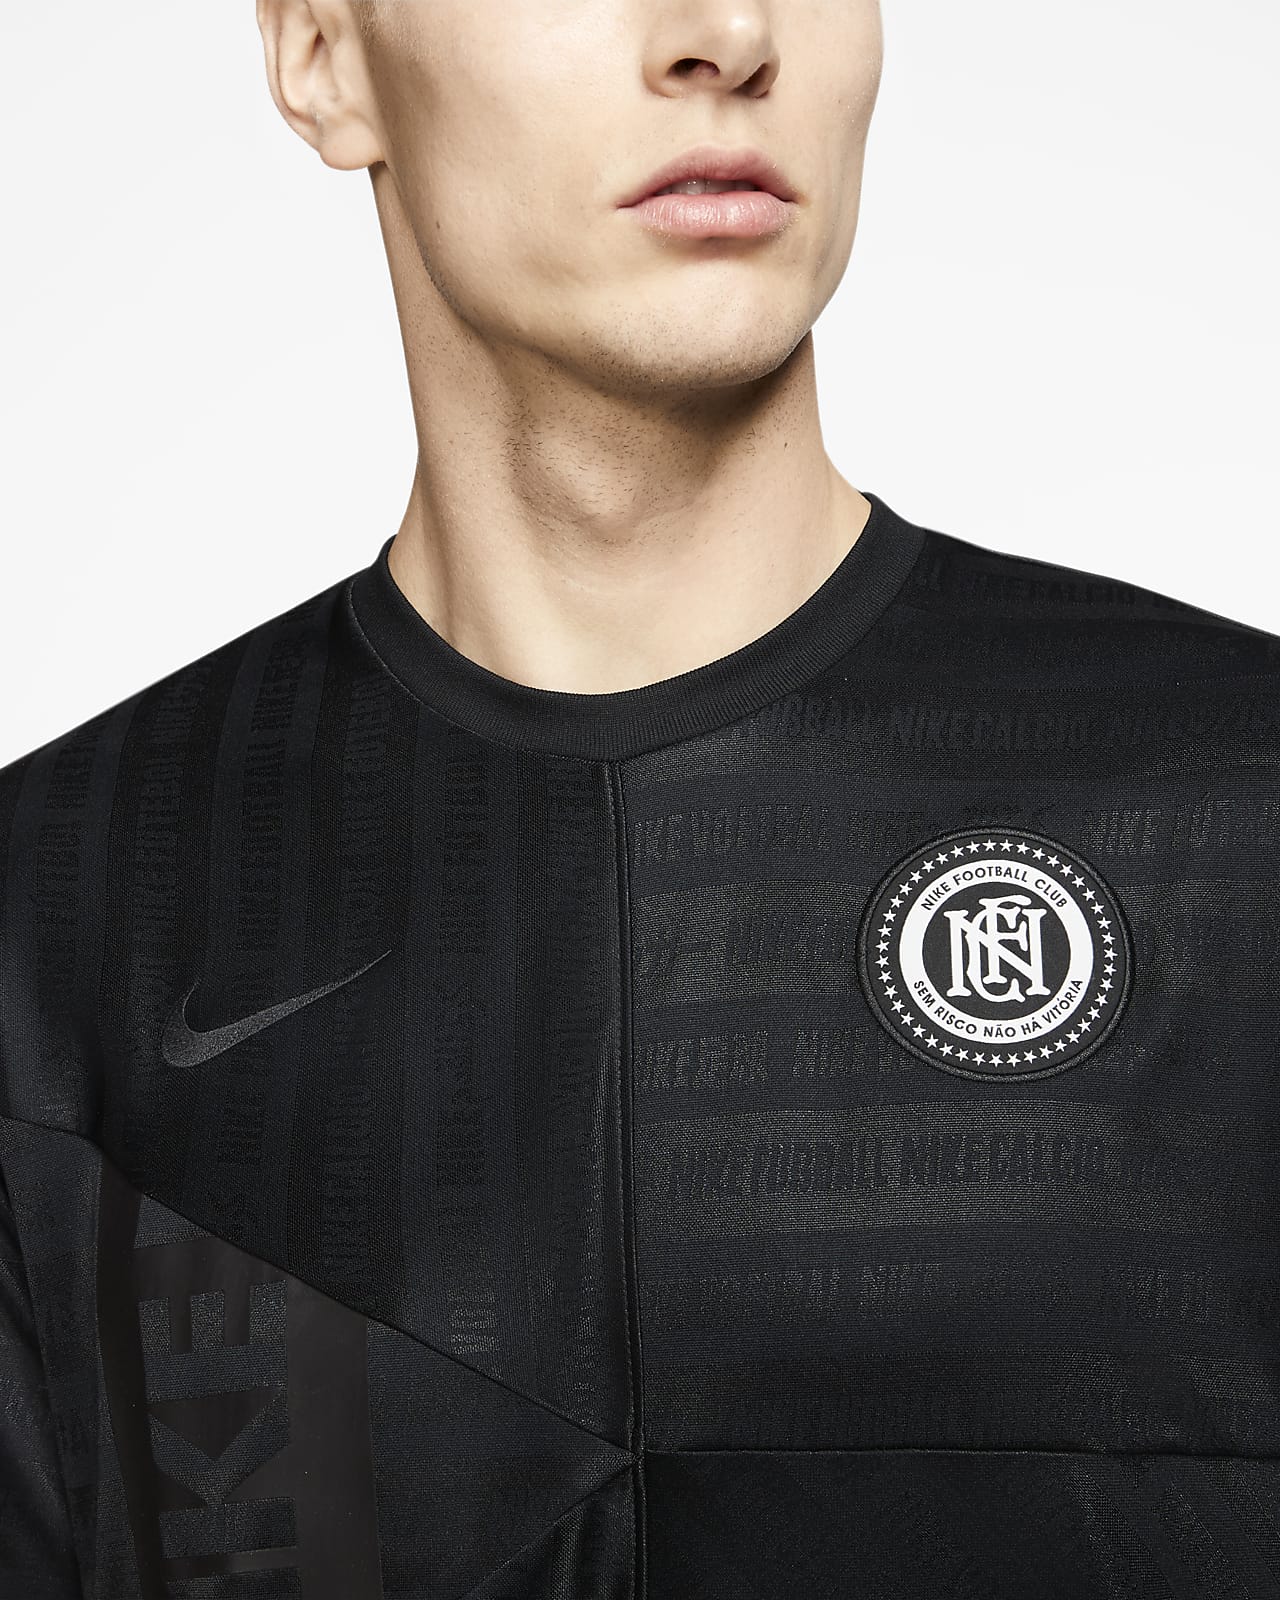 passie Doe voorzichtig pols Nike F.C. Away Football Shirt. Nike AU